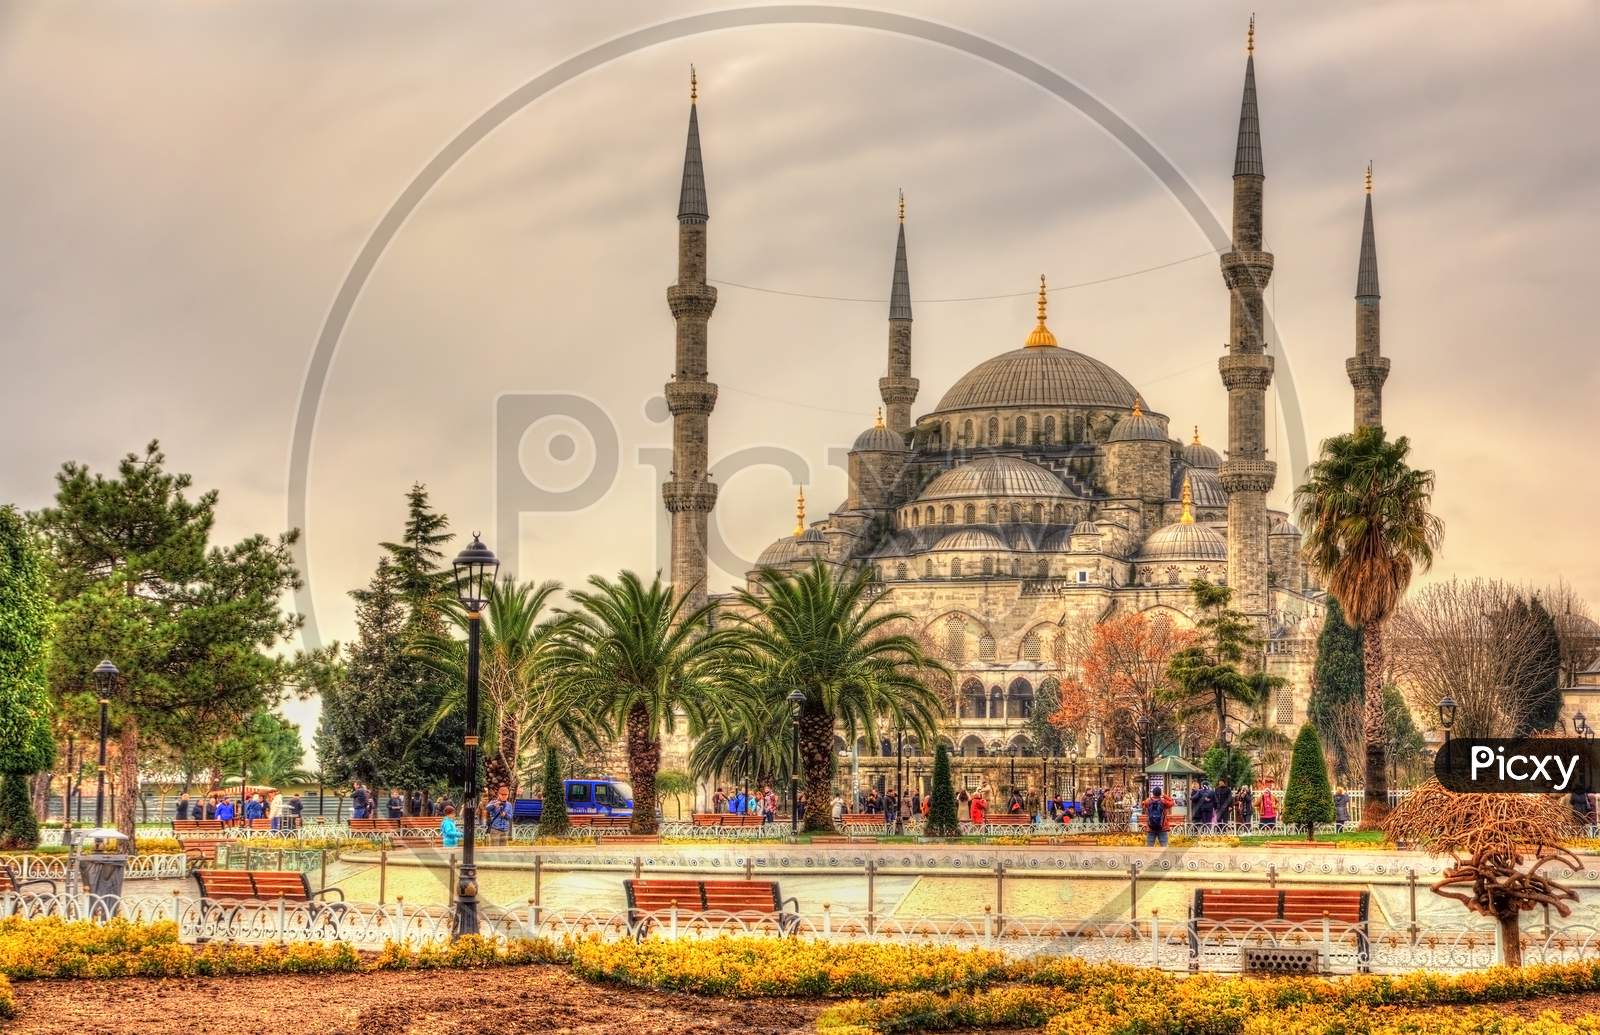 Sultan Ahmet Mosque (Blue Mosque) In Istanbul - Turkey